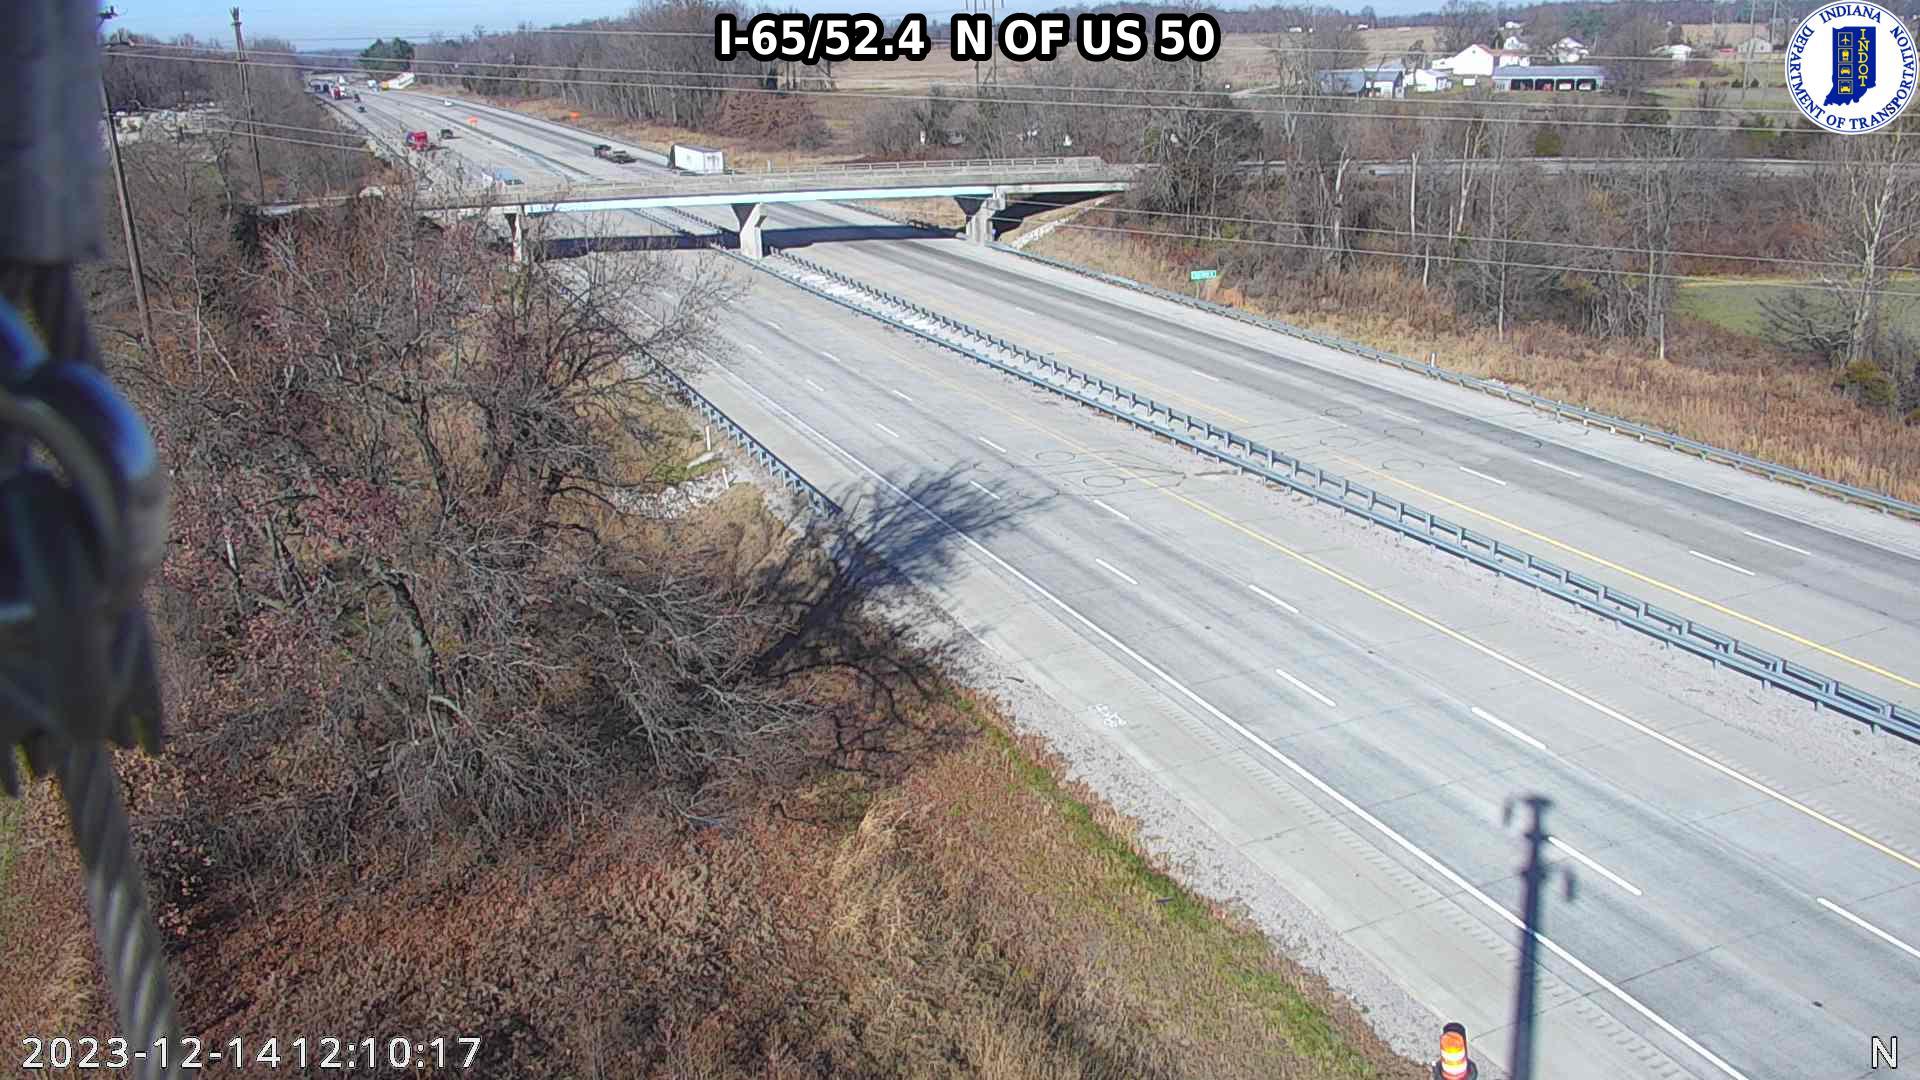 Traffic Cam Rockford: I-65: I-65/52.4 N OF US 50: I-65/52.4 N OF US 50 Player